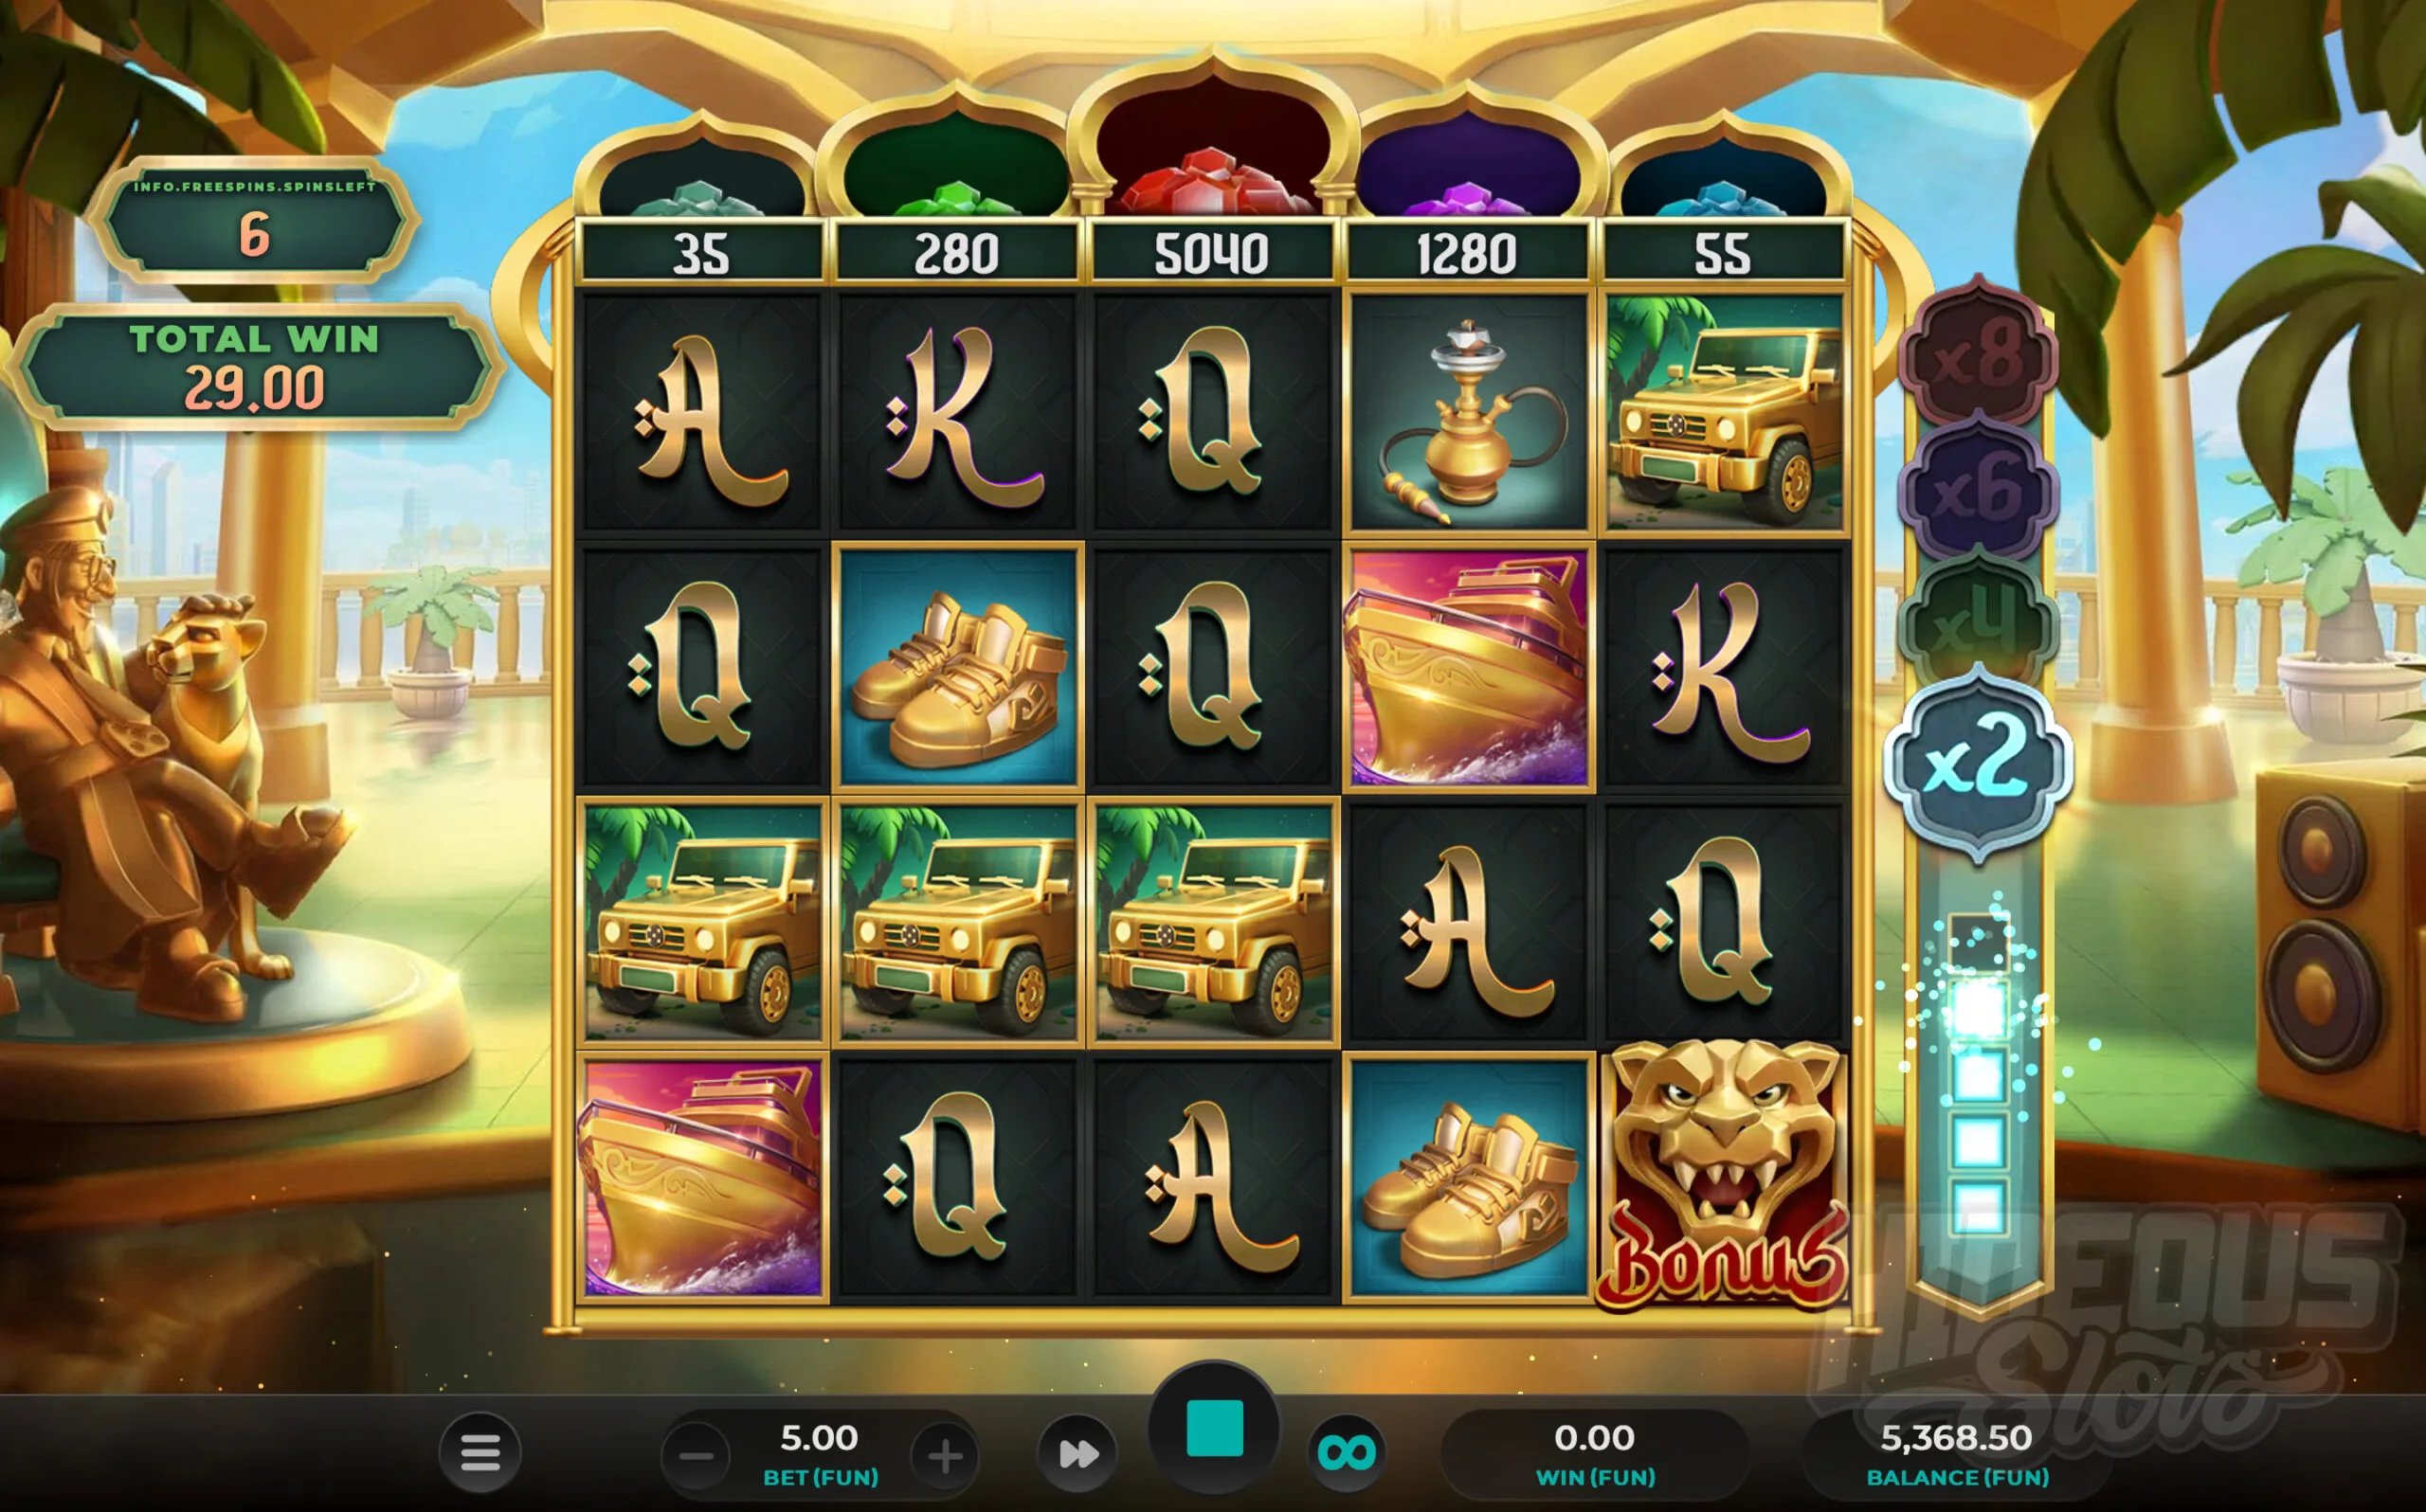 Collect Bonus Symbols to Unlock New Levels in the Free Spins Bonus